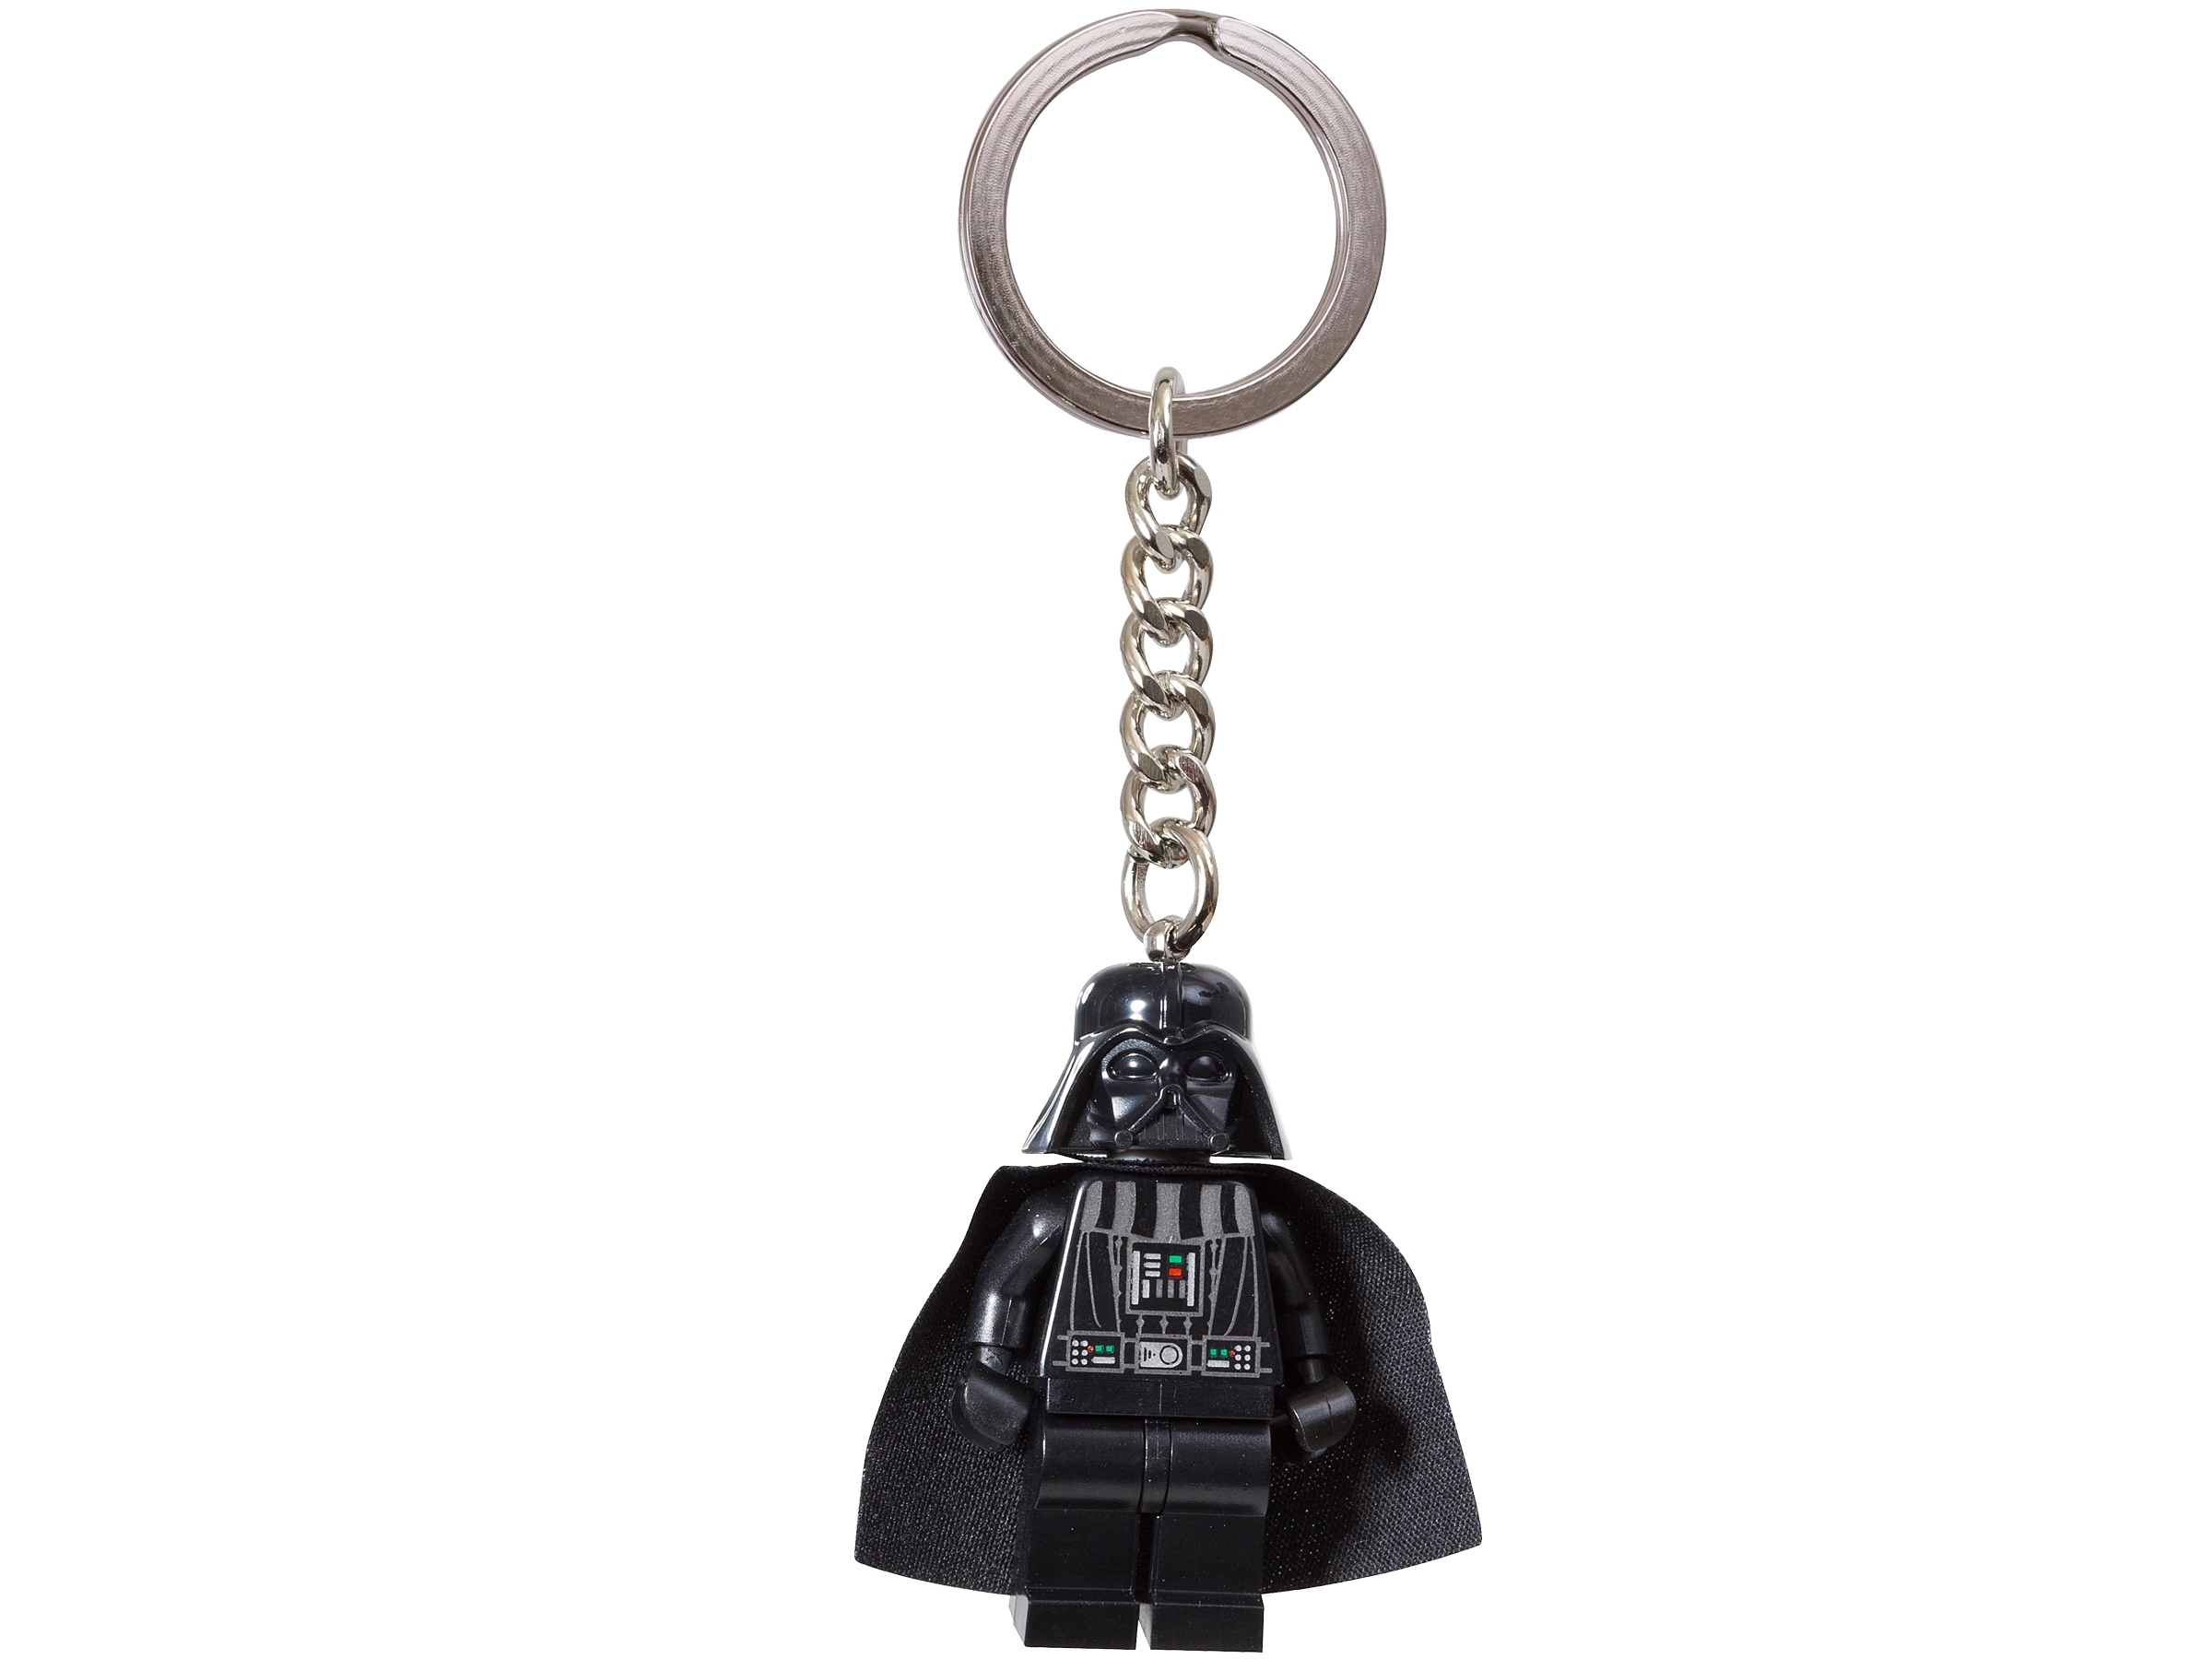 Star Wars Series Keychain Metal Key Chain Keyring Gift New 